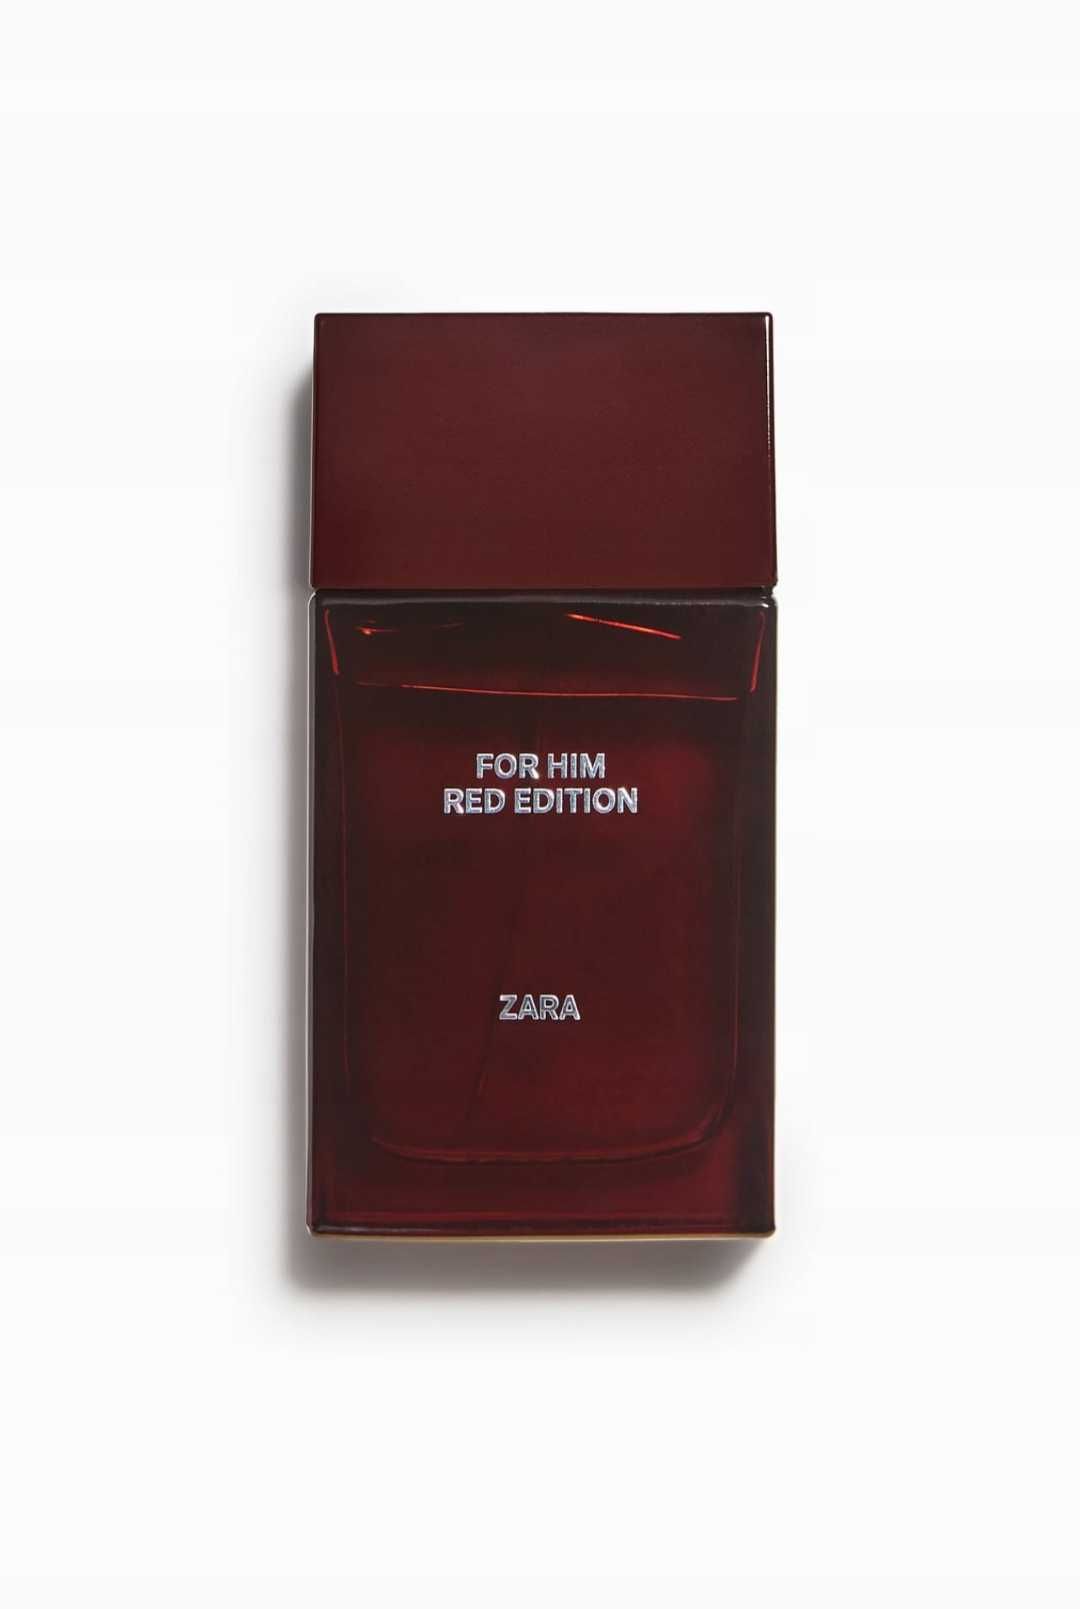 Zara Red edition